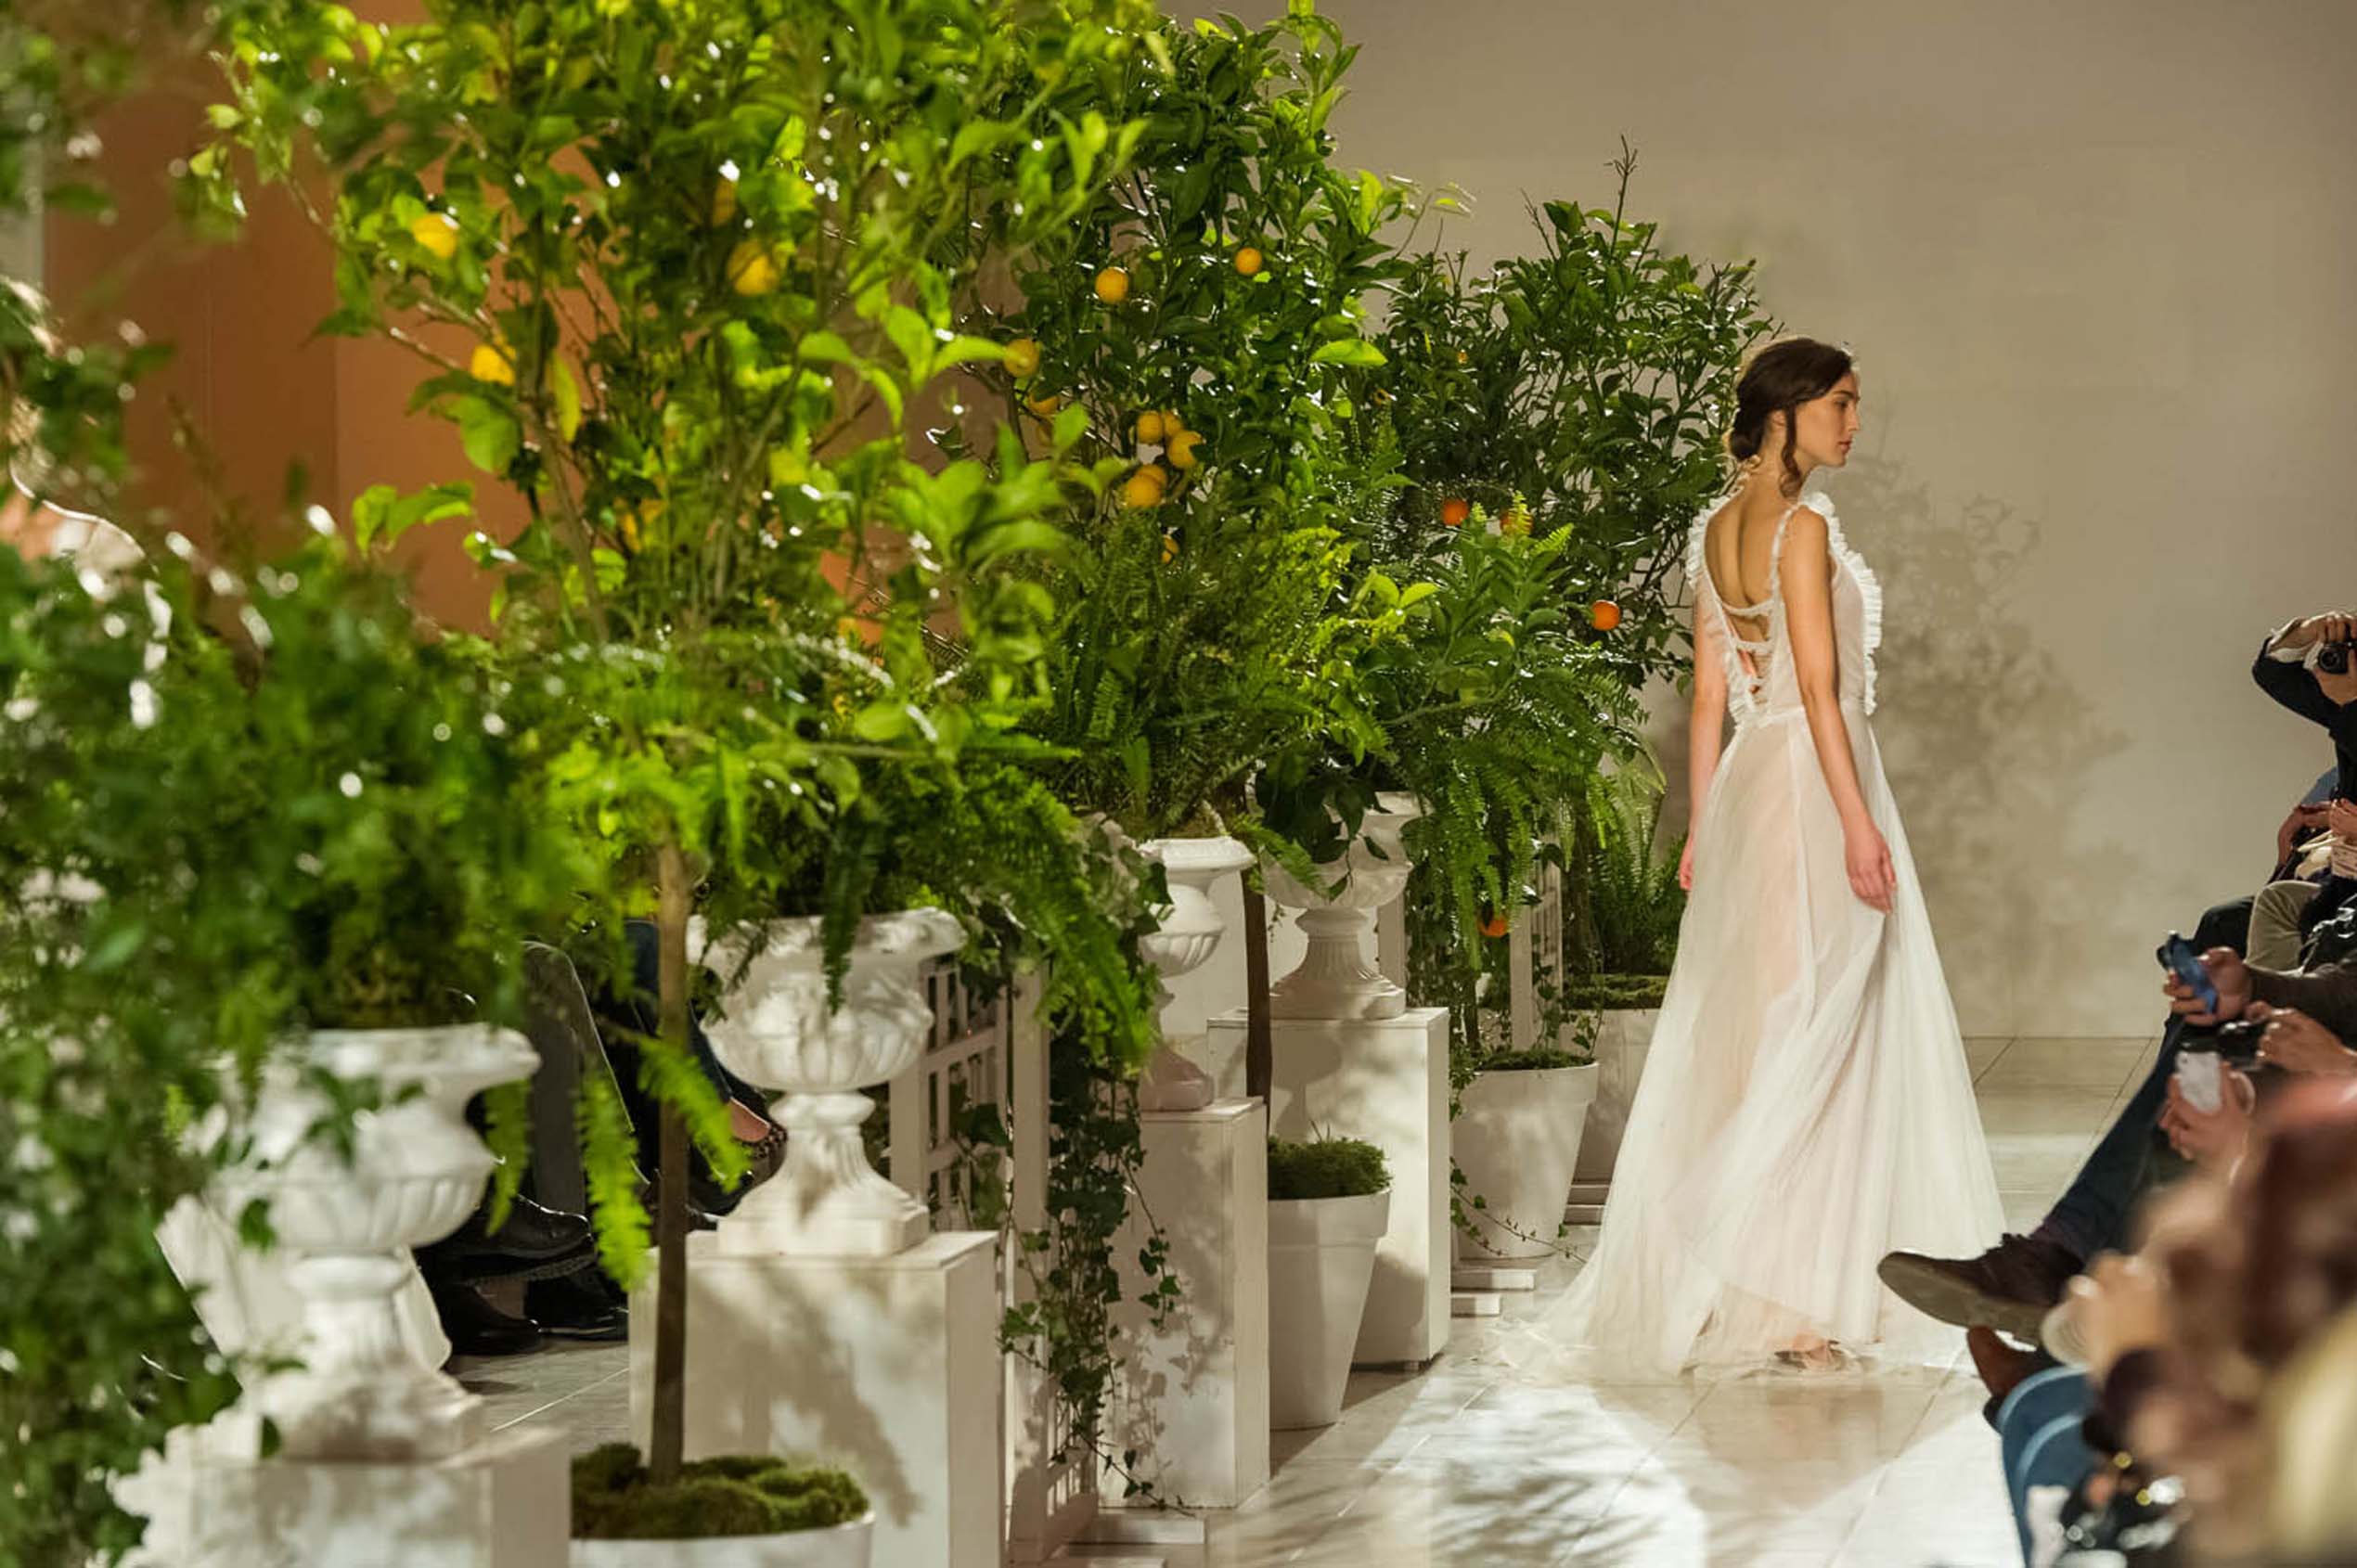 Bridal Fashion Week 2020 - Η μεγάλη έκπληξη που θα κλείσει το πιο “λευκό” event της χρονιάς